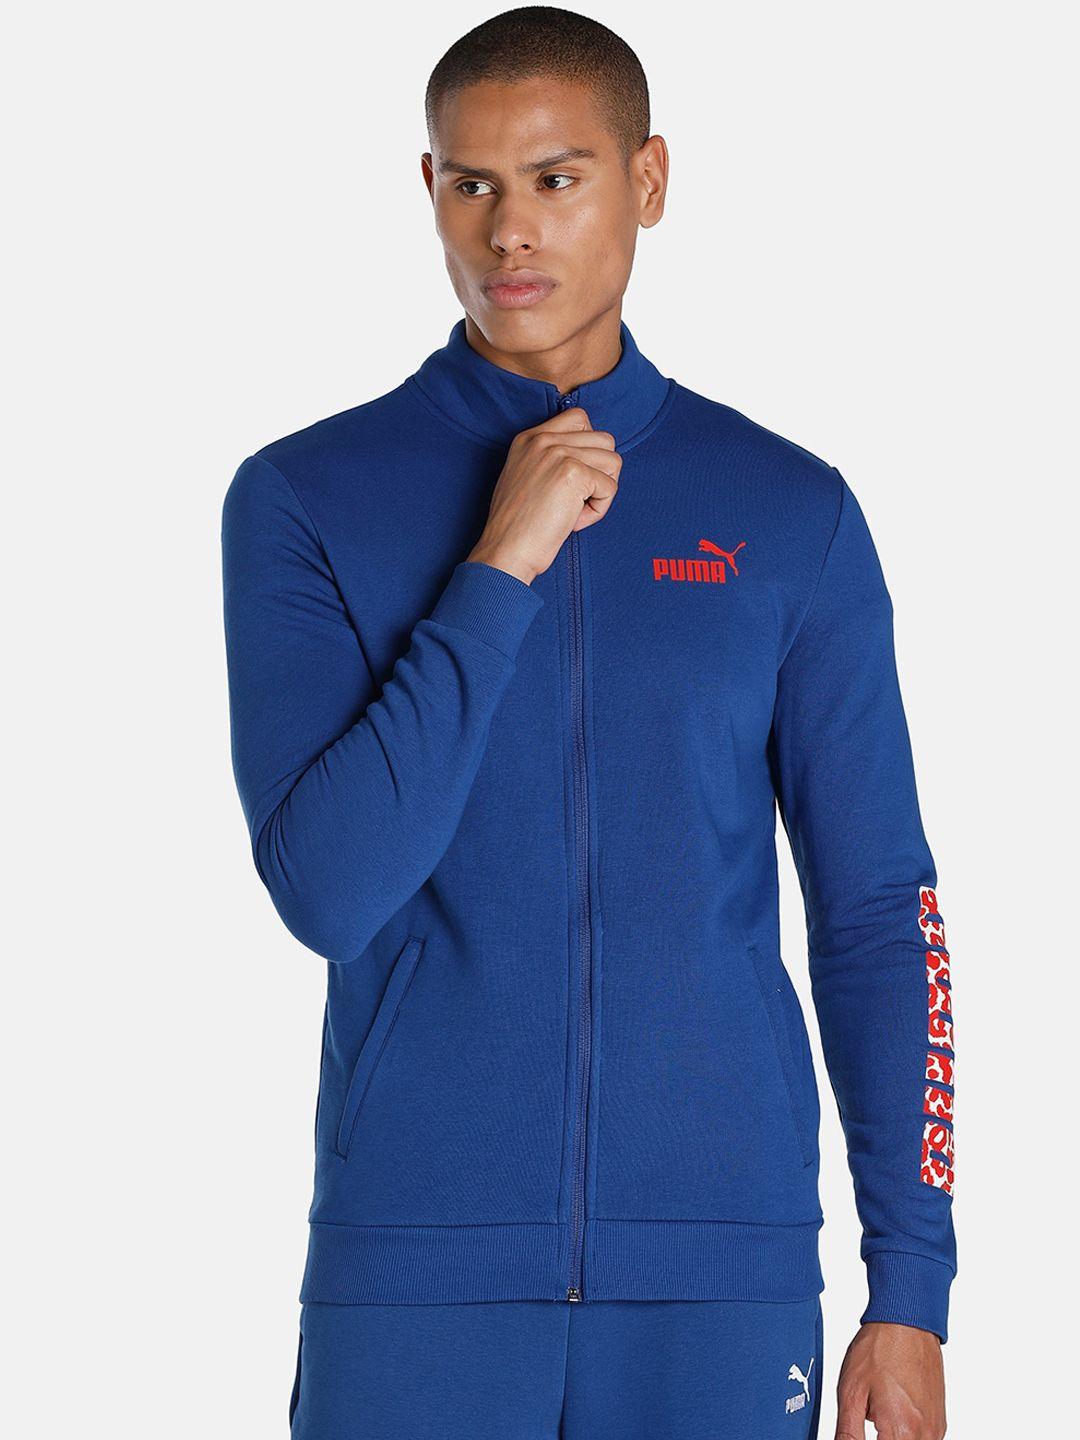 puma-men-blue-textured-logo-knitted-outdoor-sporty-jacket